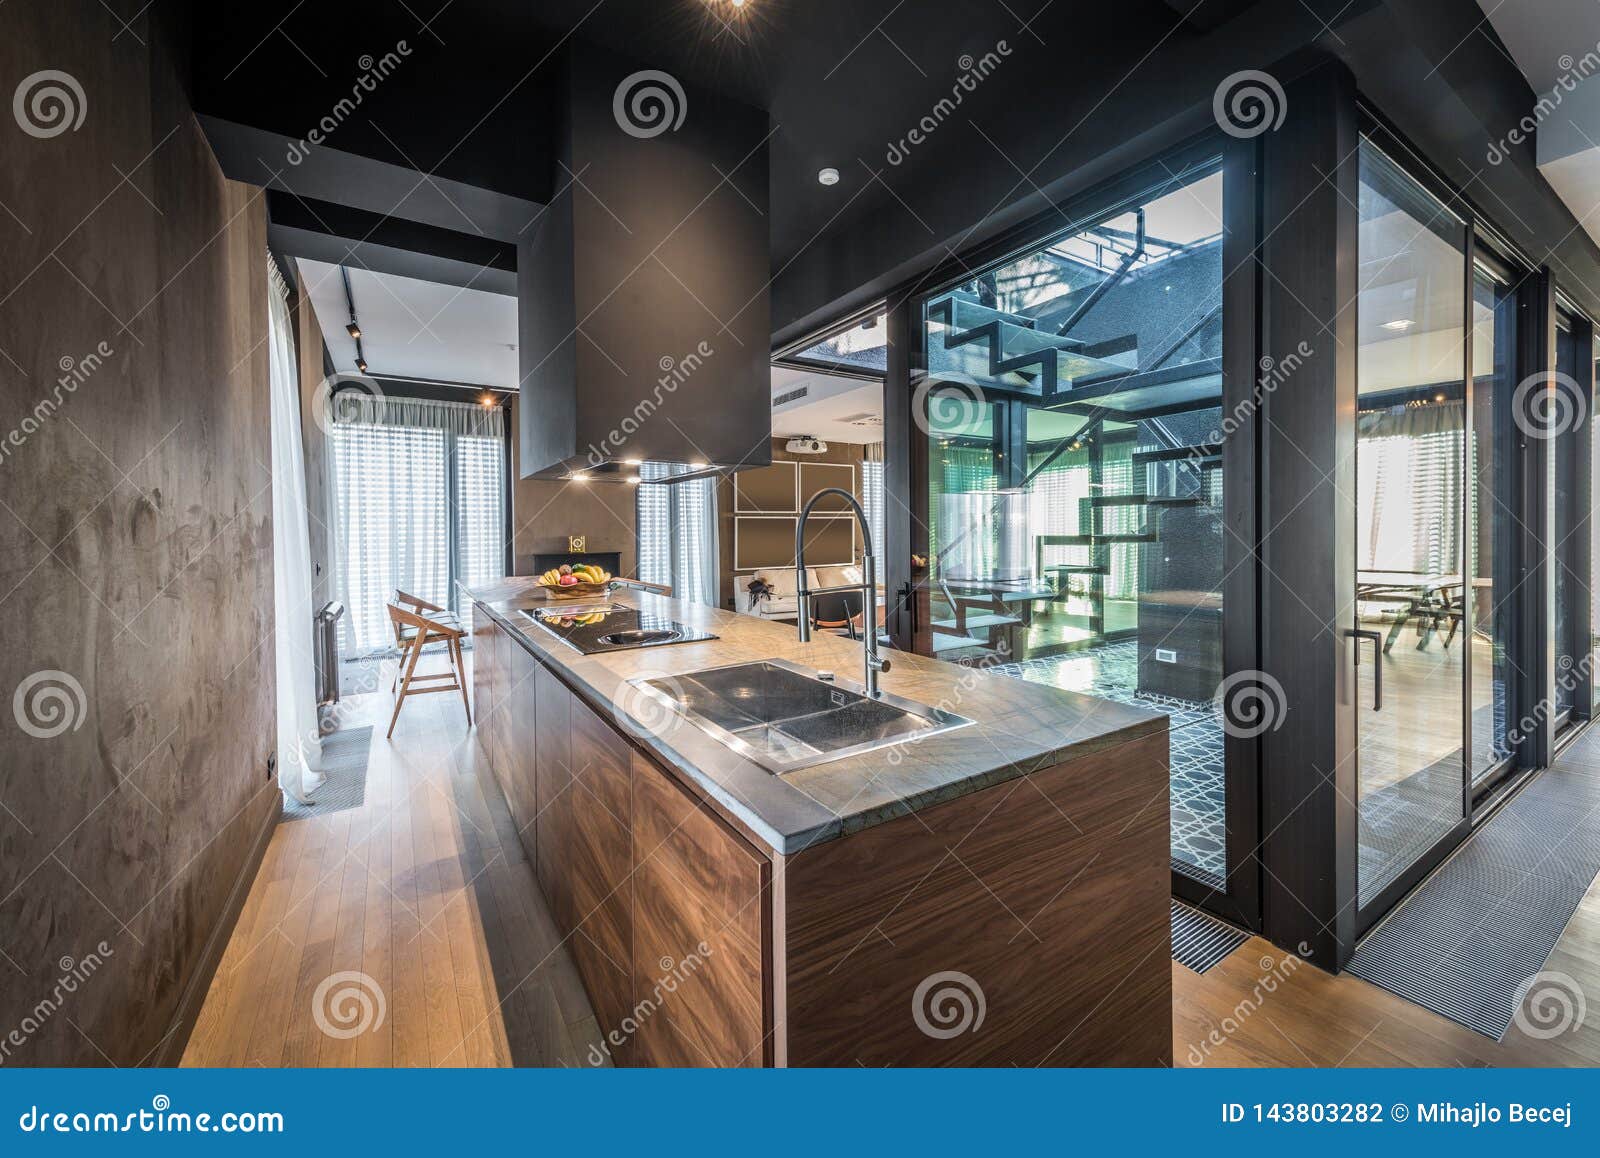 kitchen interior in modern luxury penthouse apartment